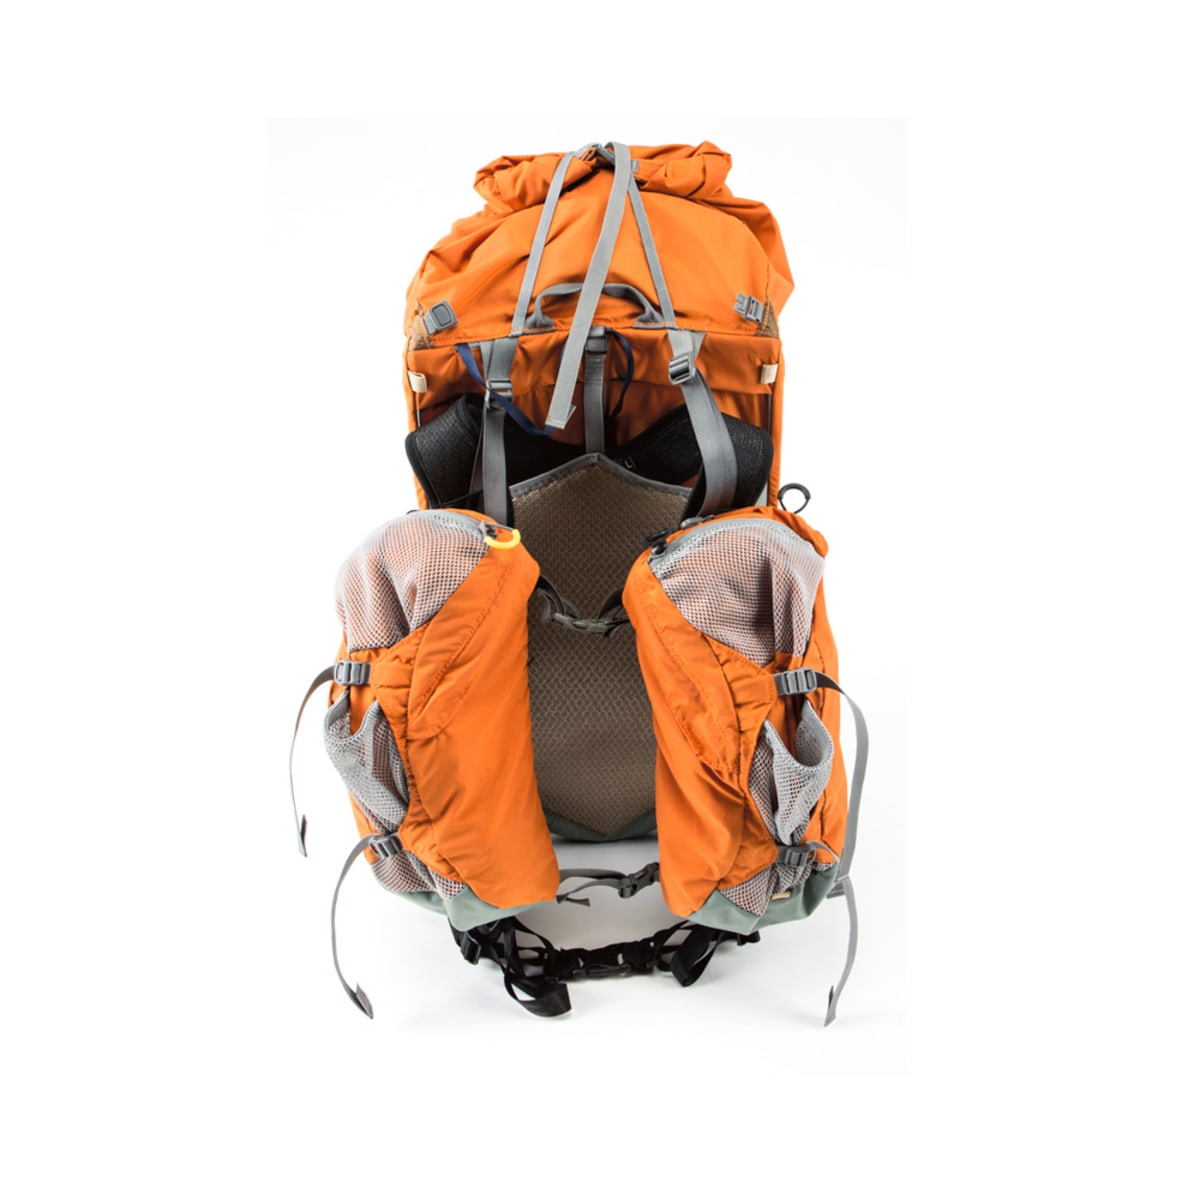 Aarn Design "Natural Balance Bodypack"